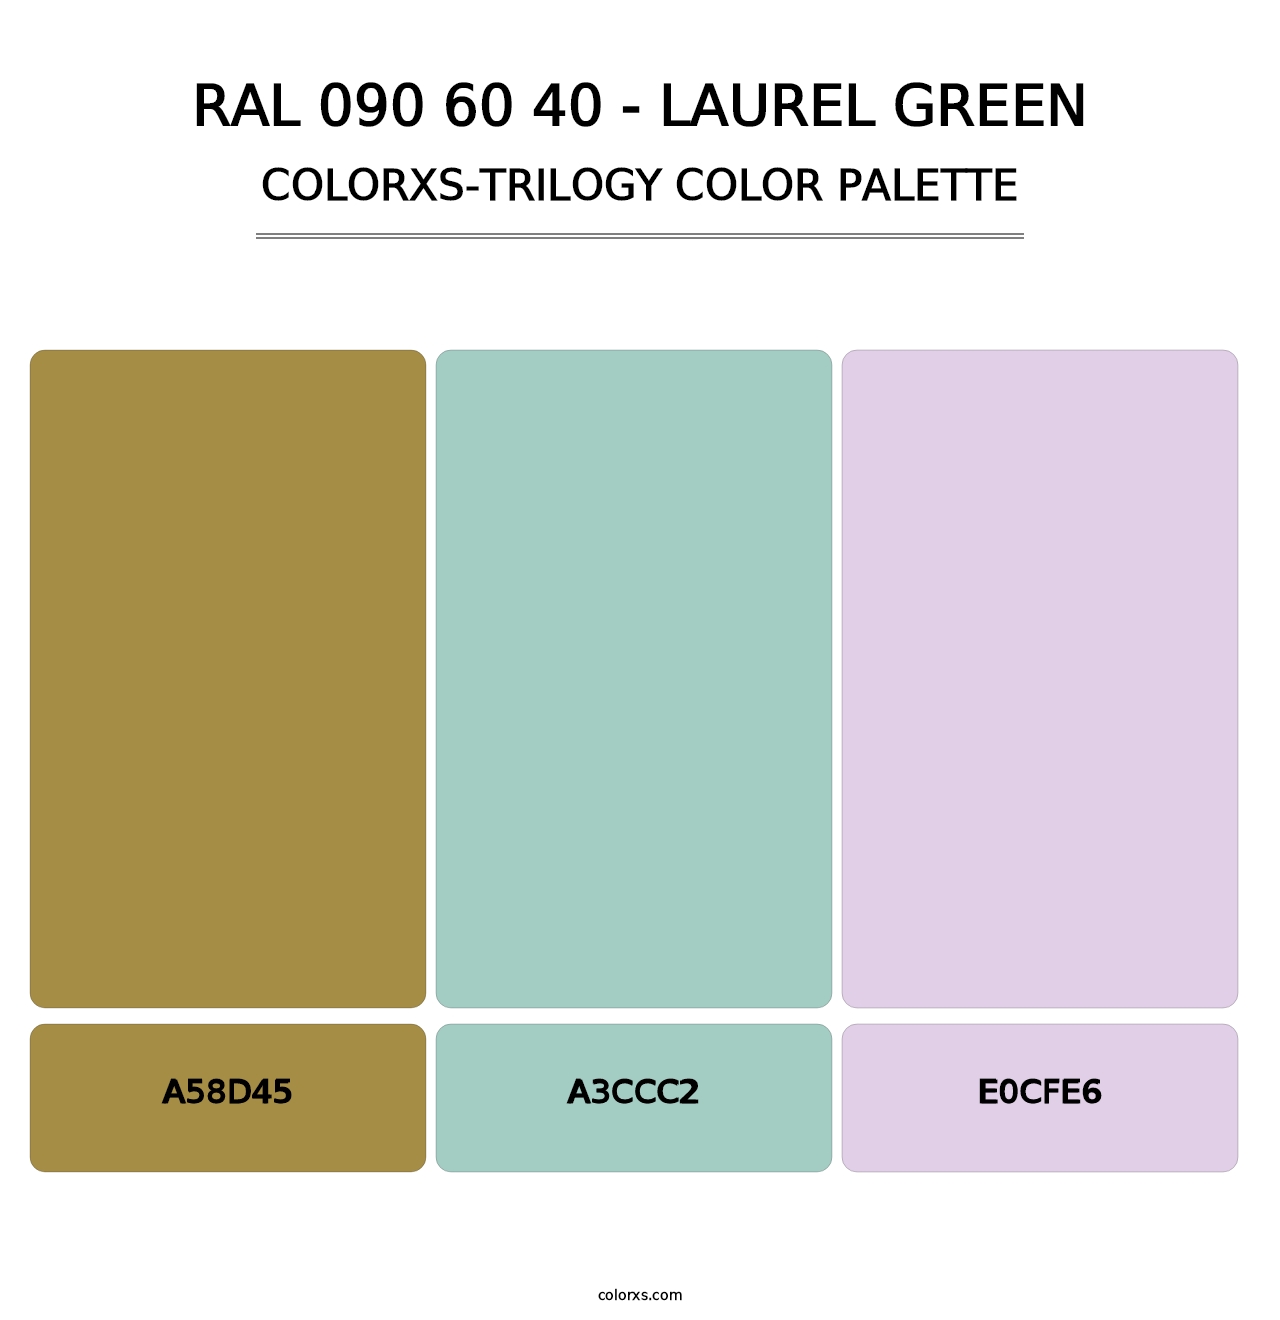 RAL 090 60 40 - Laurel Green - Colorxs Trilogy Palette